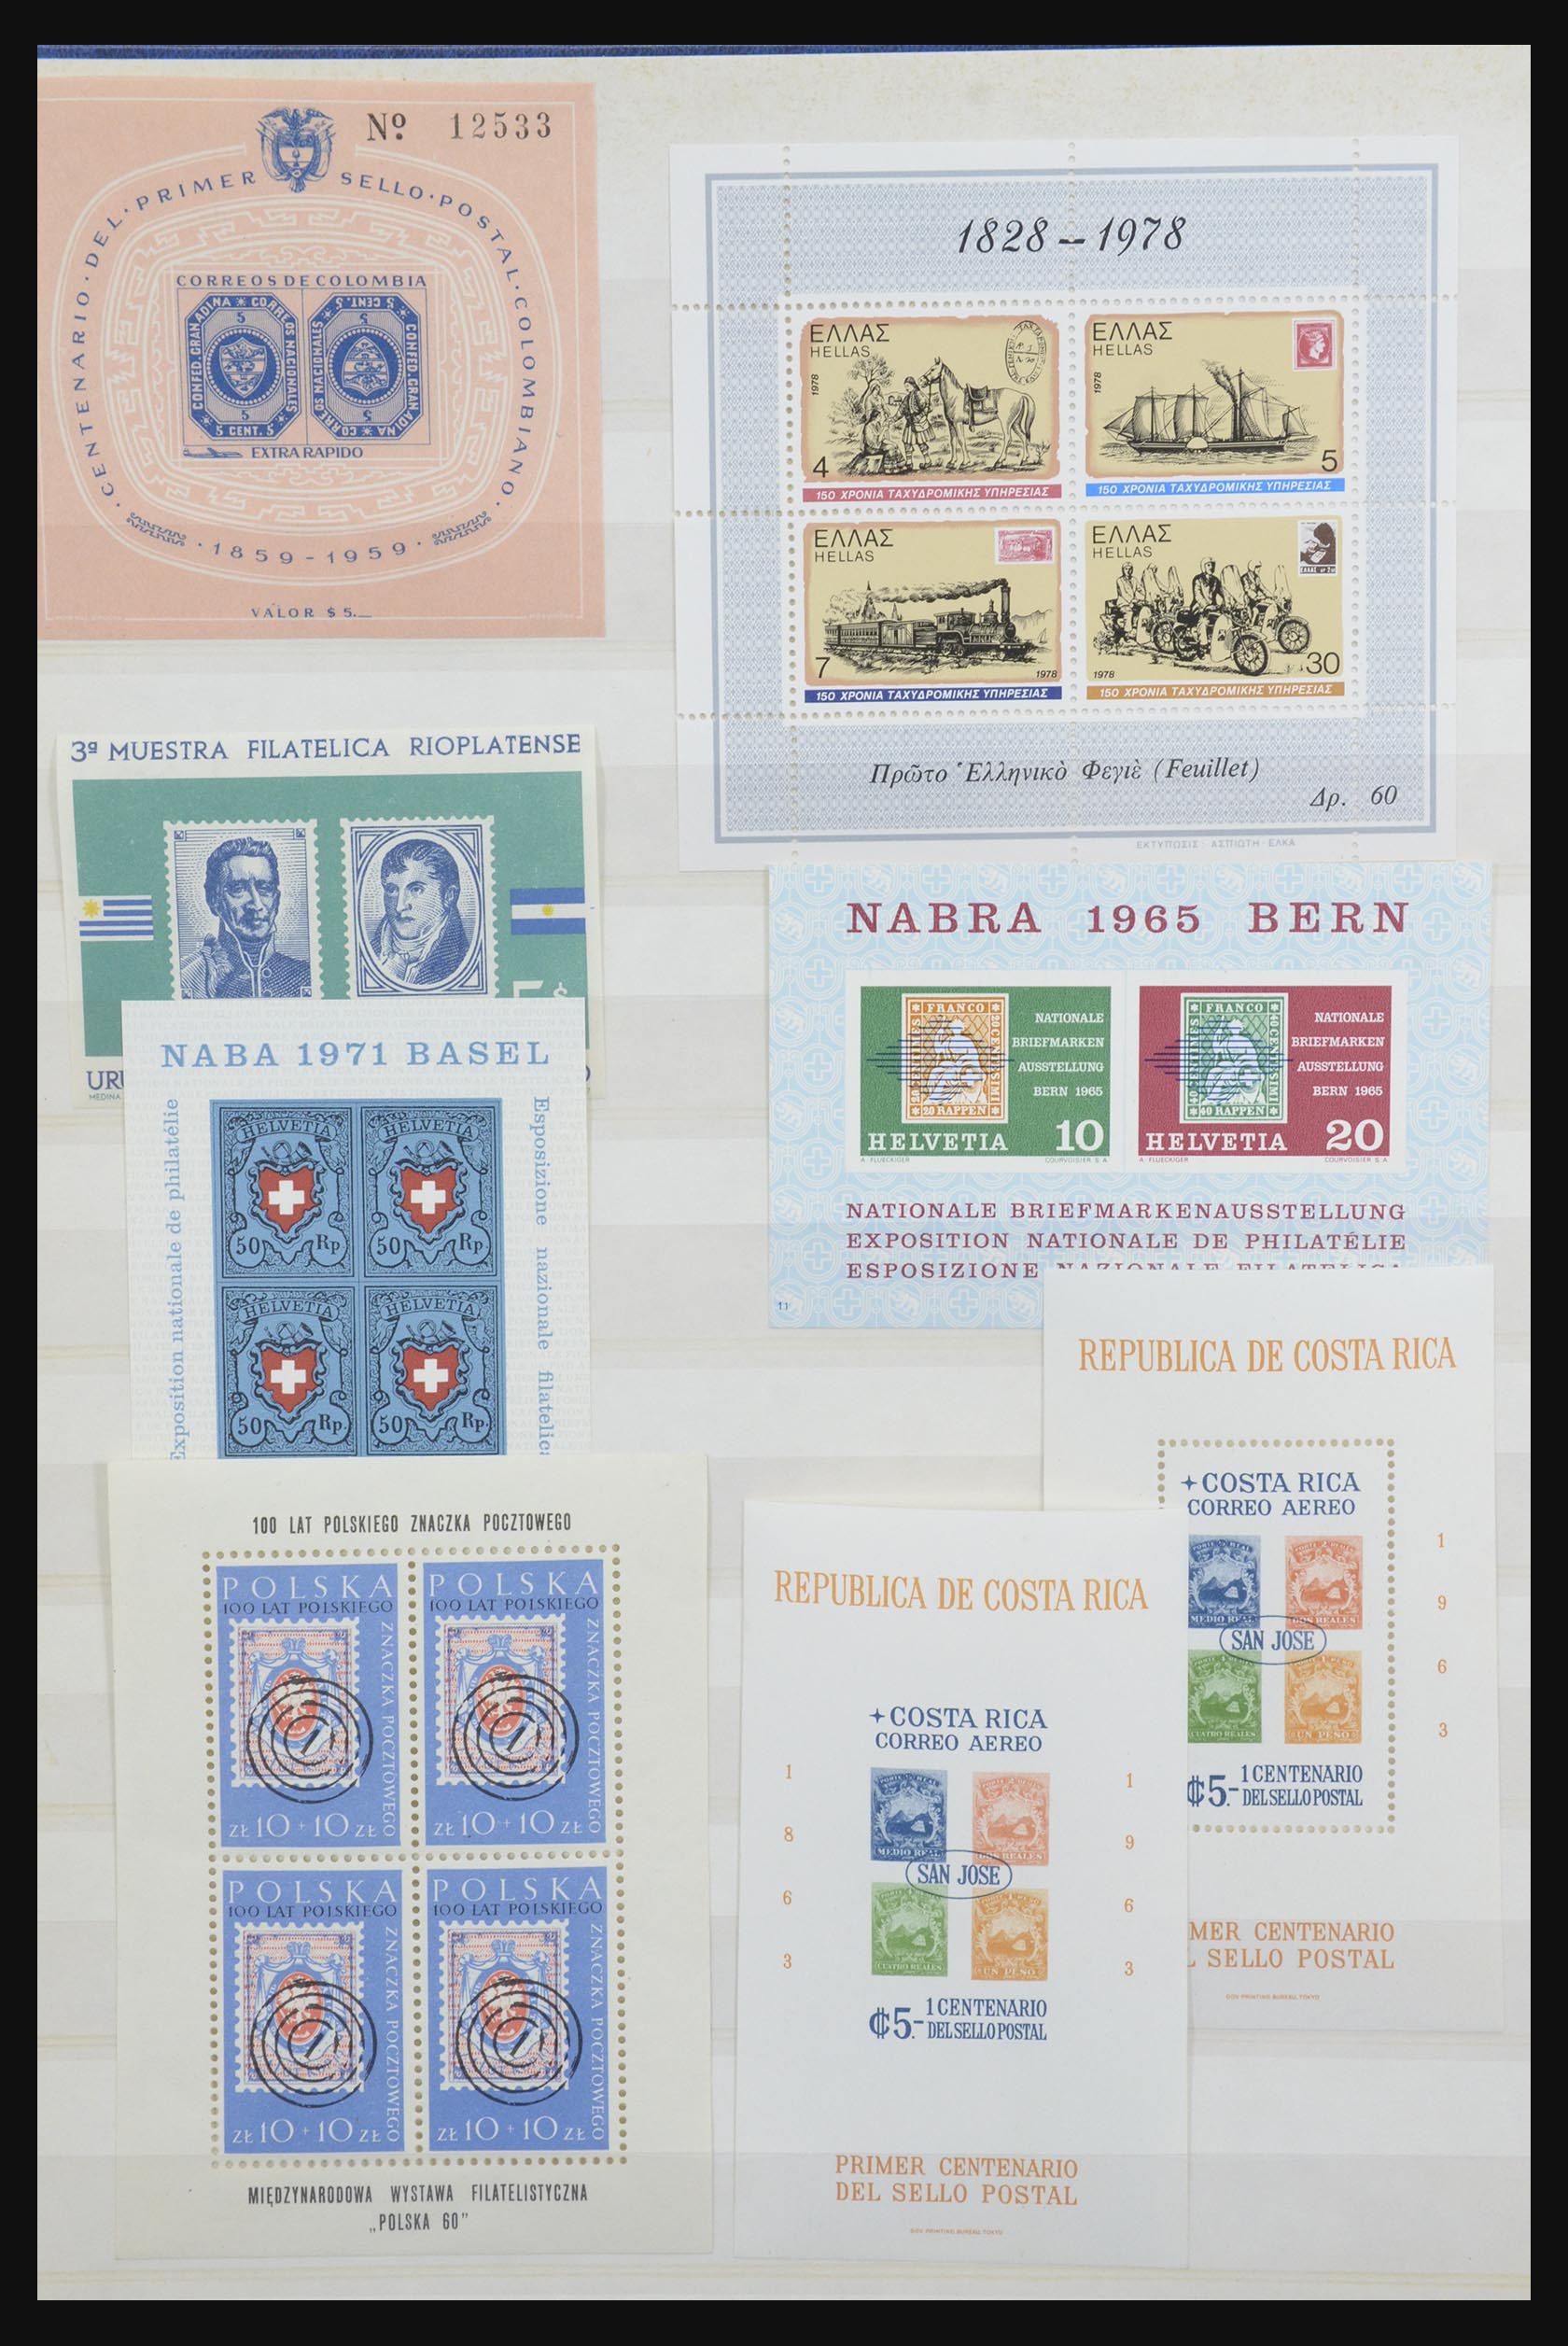 31652 008 - 31652 Motief: postzegel op postzegel 1940-1993.